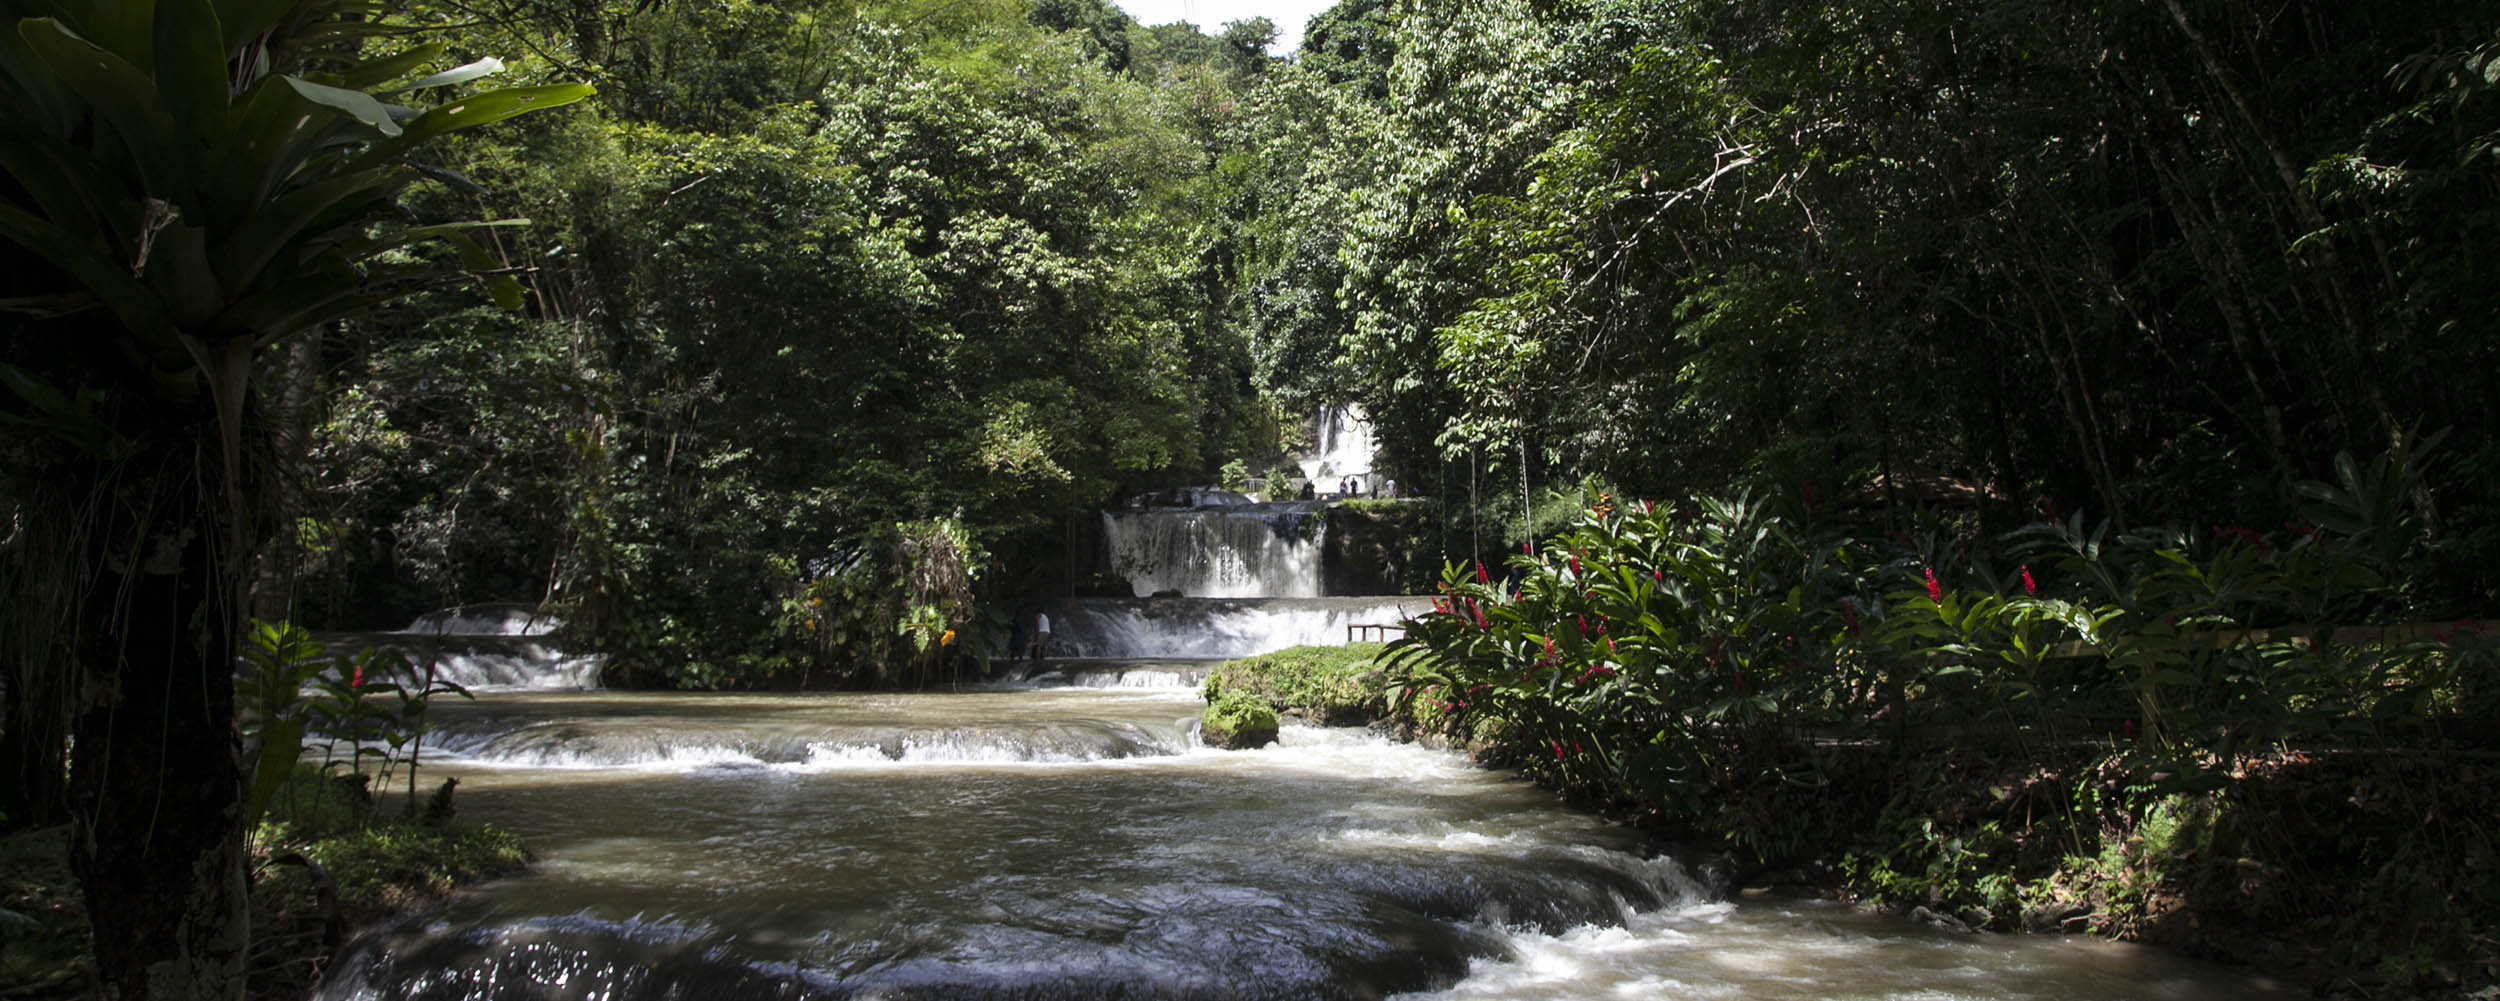 YS Falls - Jamaica